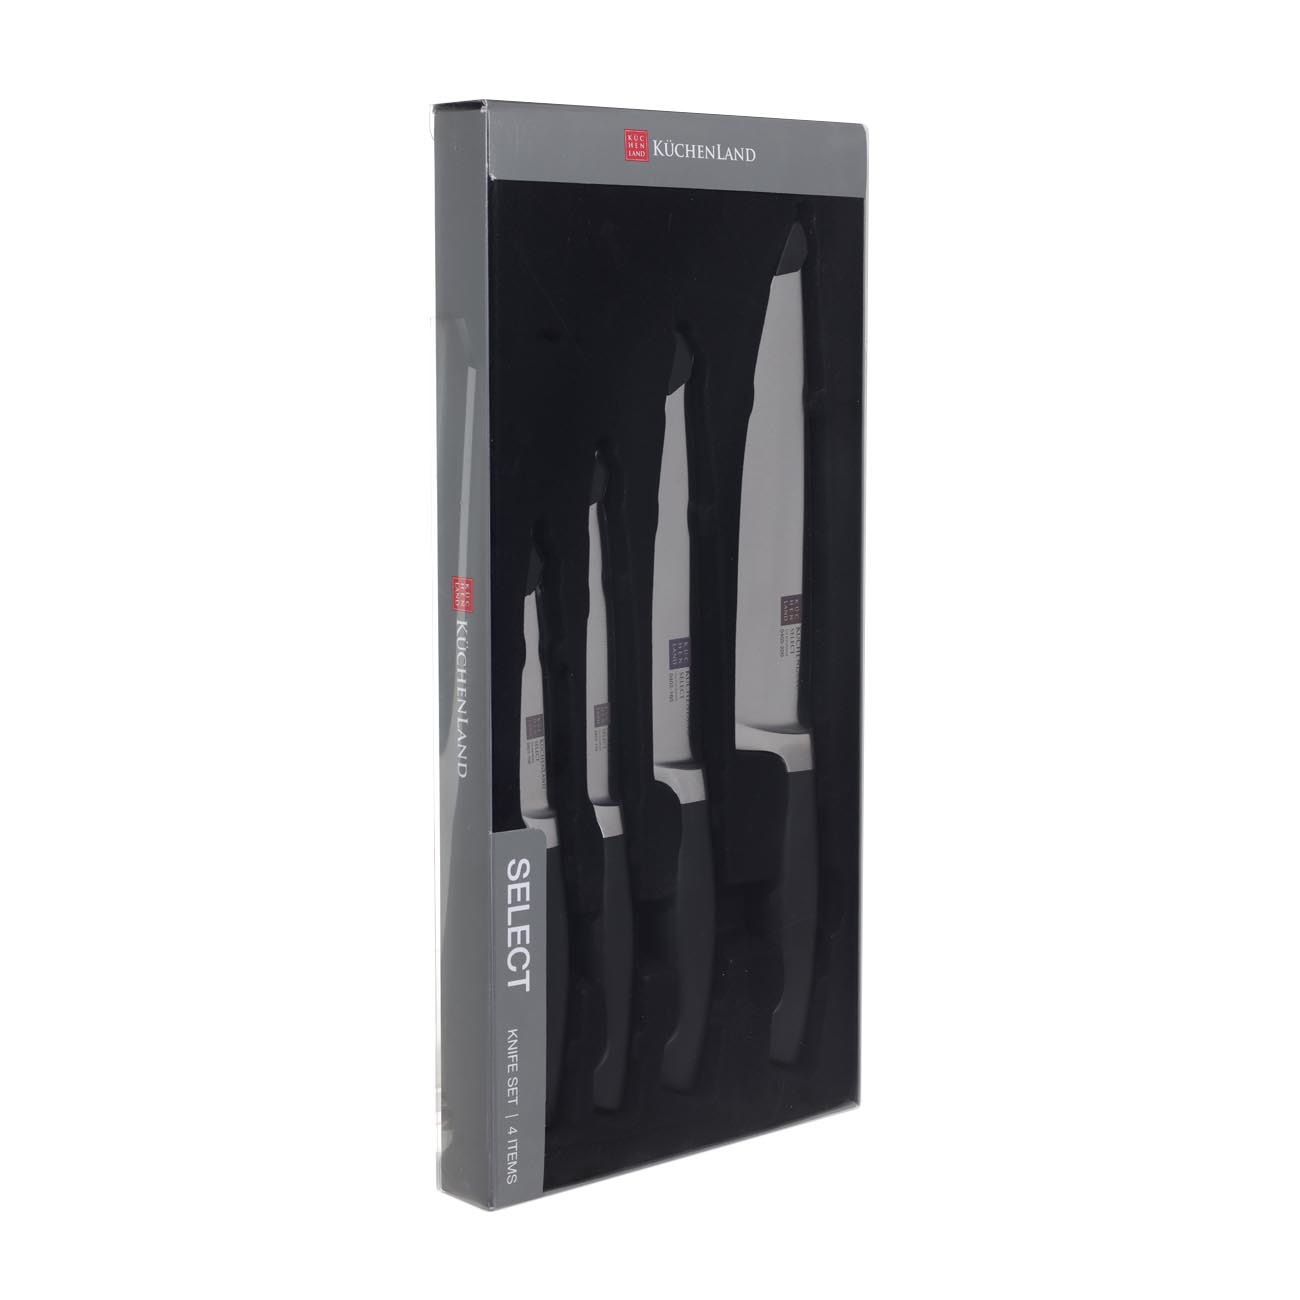 Knife set, 4 Pieces, Steel/Plastic, Choose изображение № 3